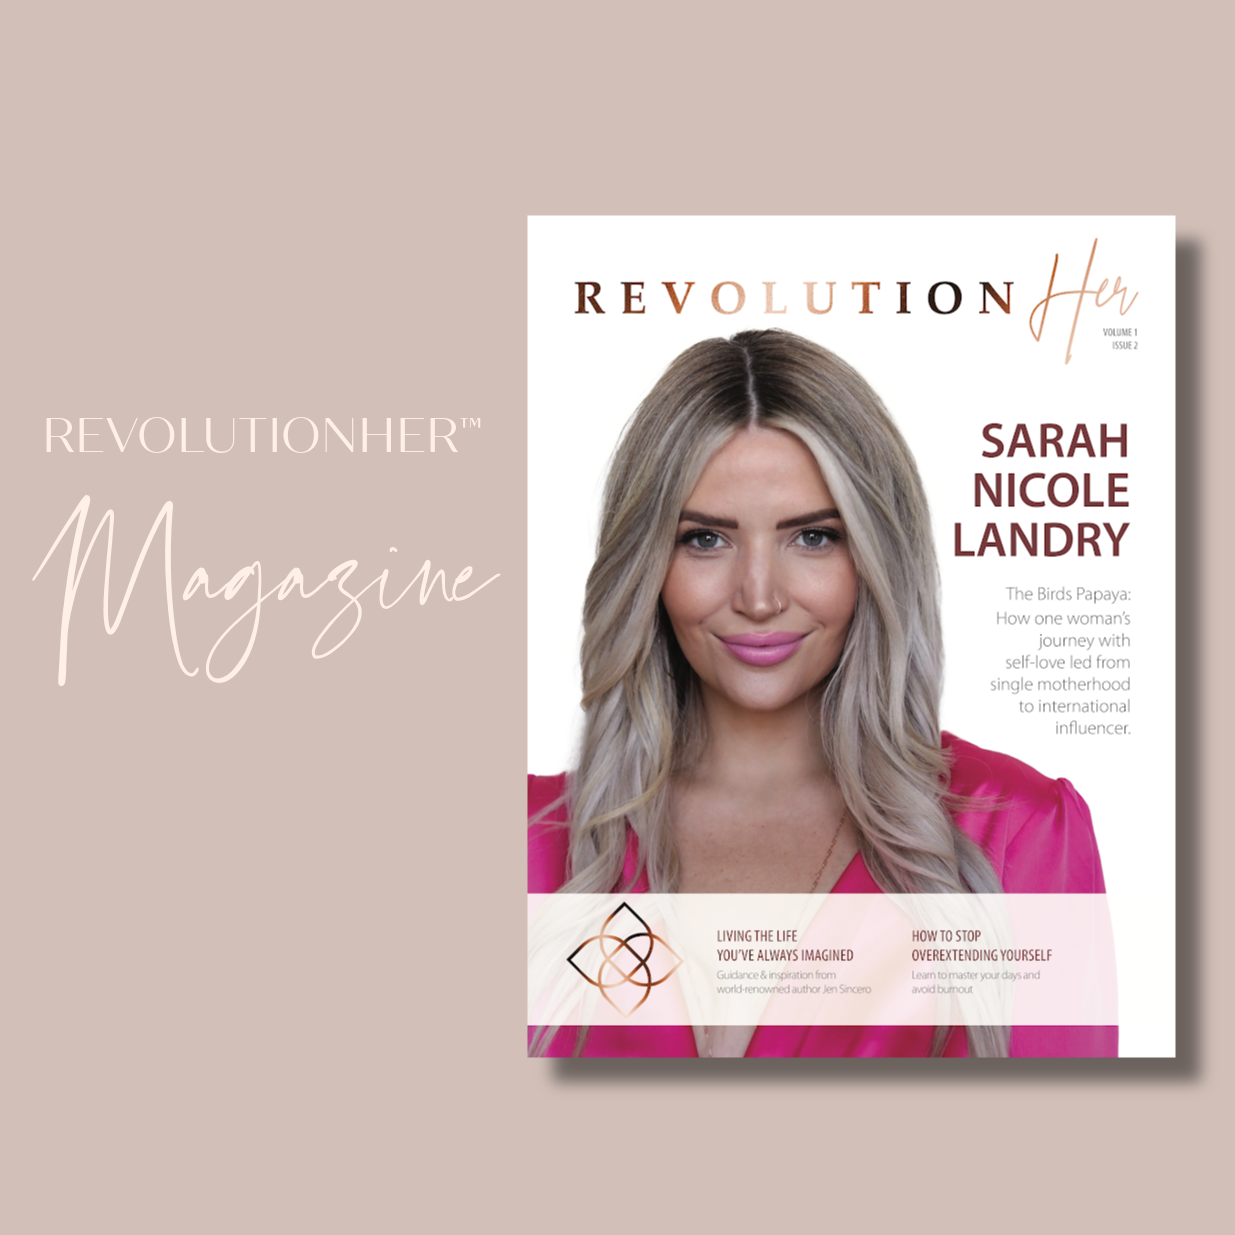 RevolutionHer™ Magazine V1.2 featuring Sarah Nicole Landry